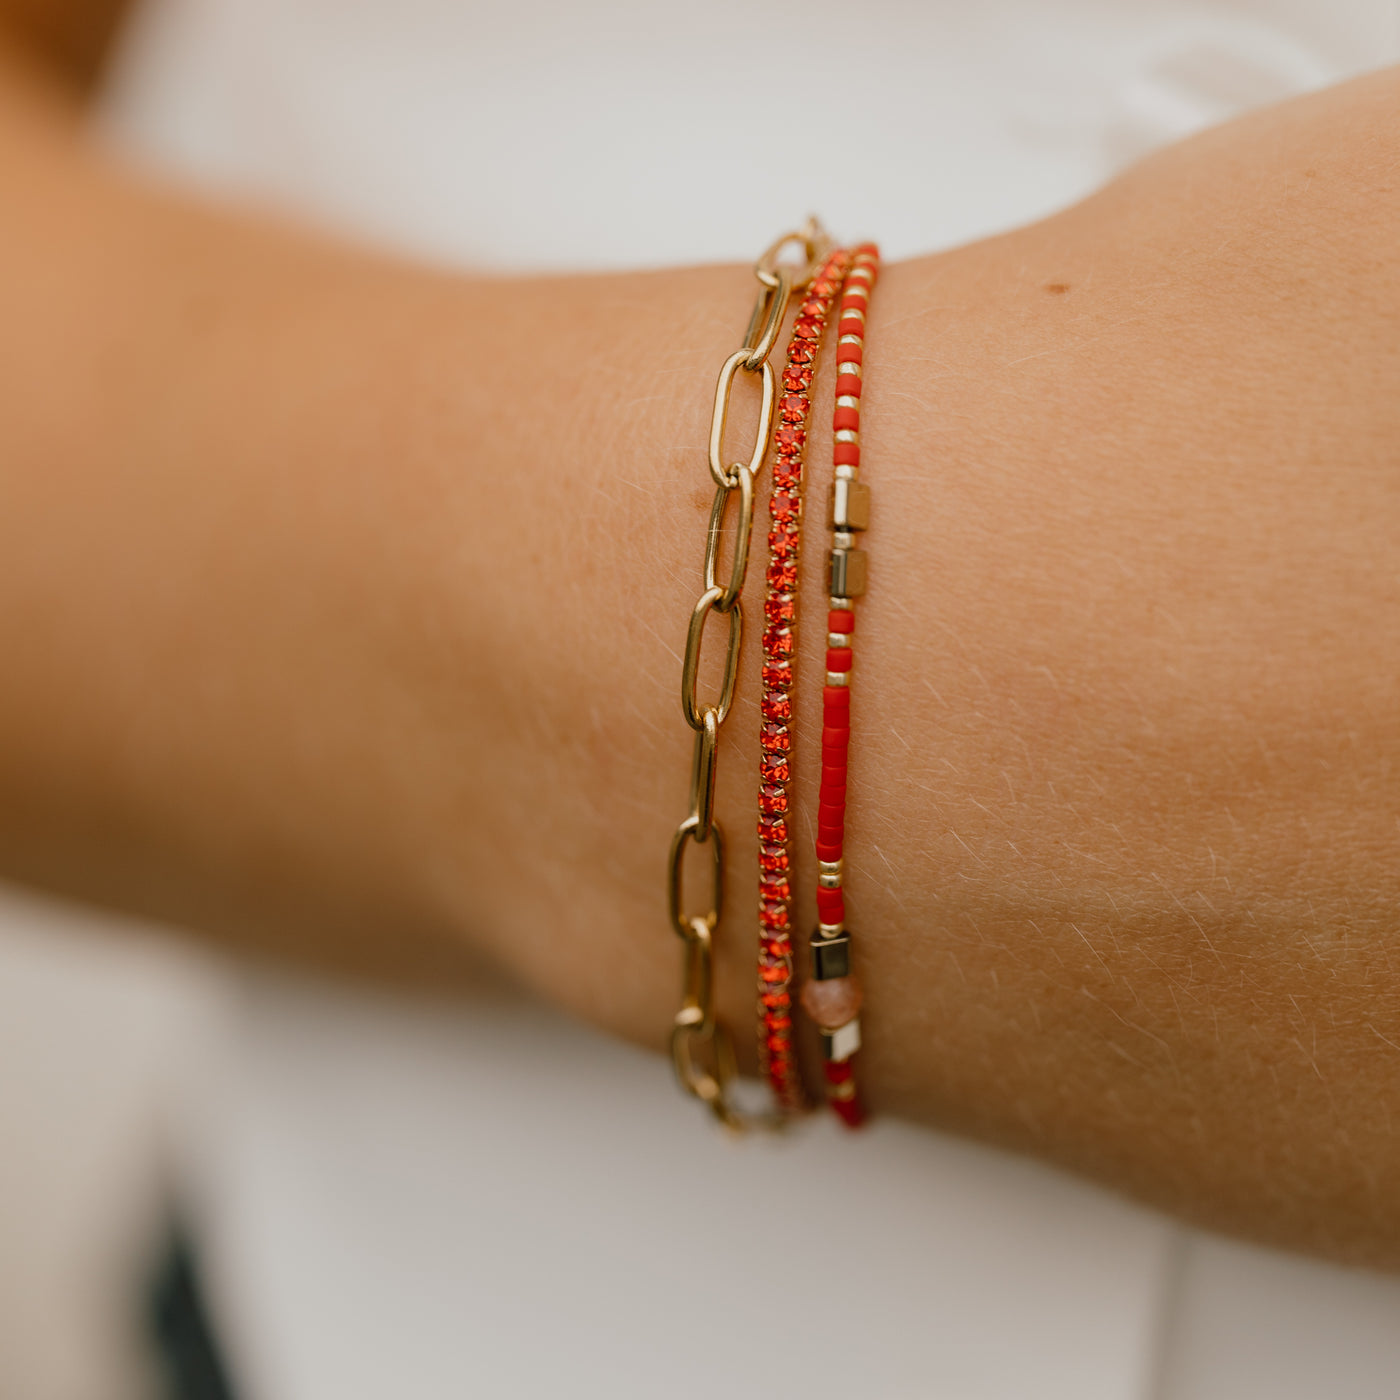 Armbånd justerbart med miyuki perler i røde nuancer